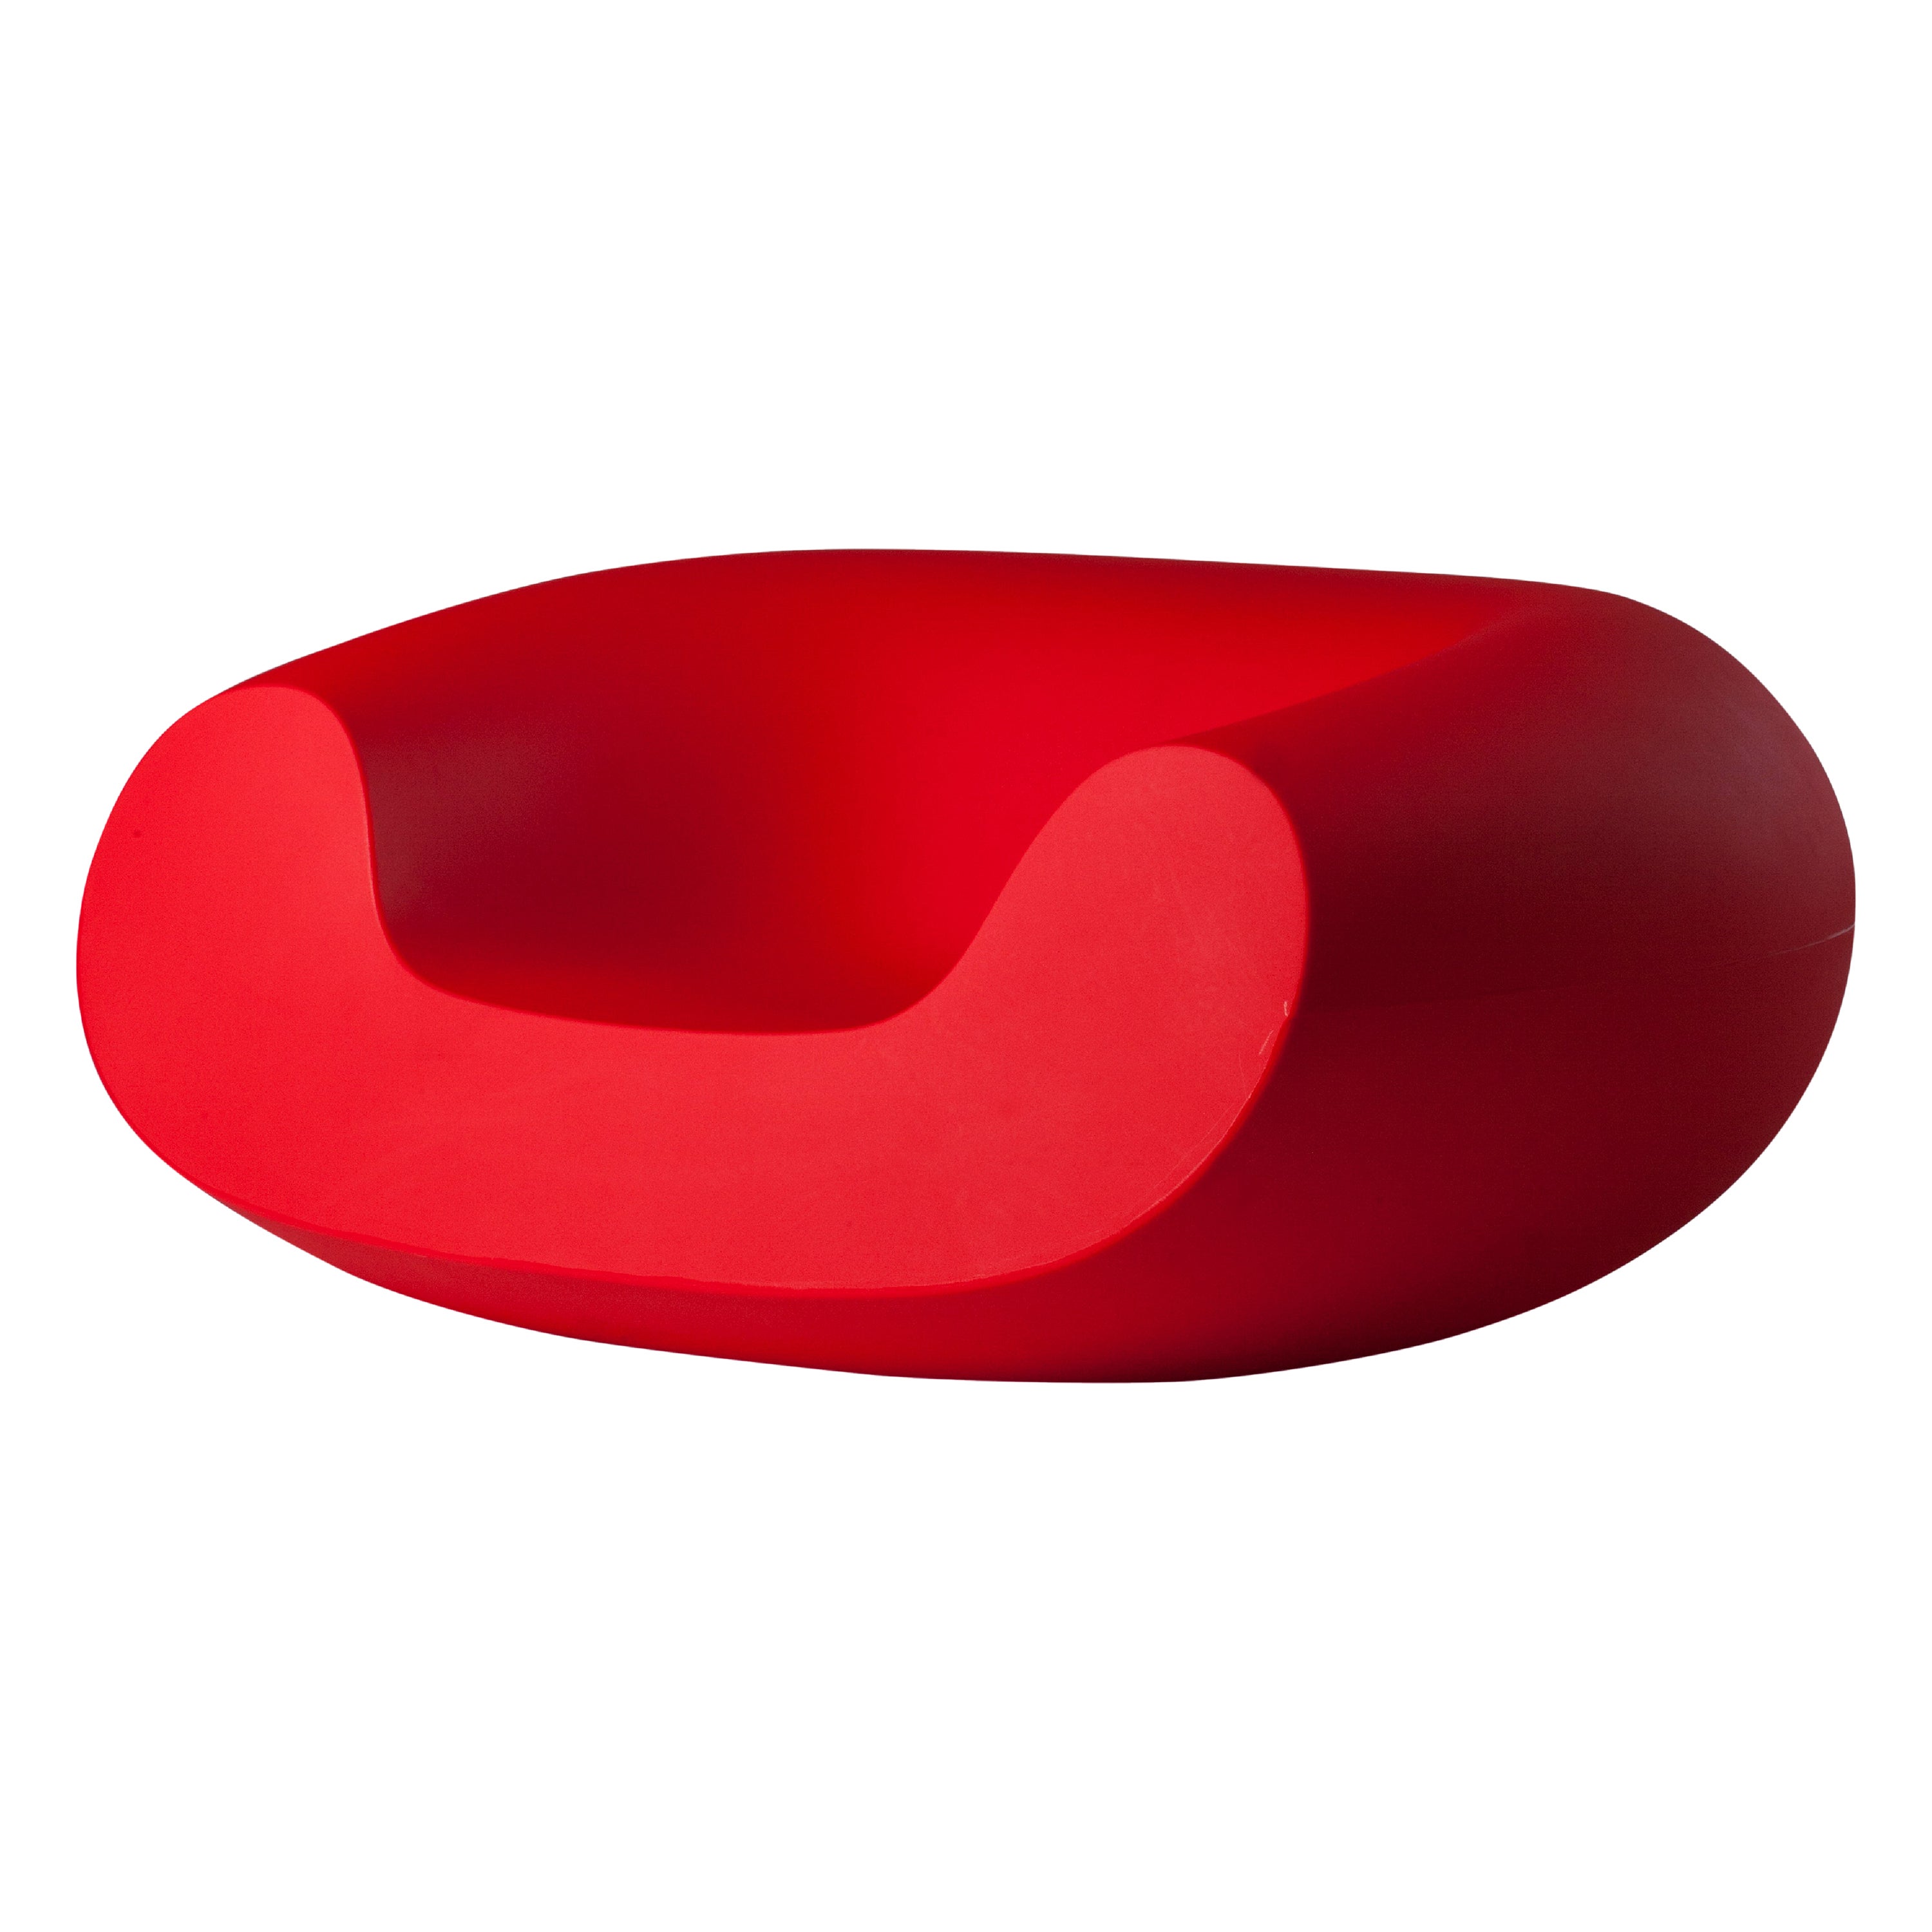 Fauteuil de salon Chubby en rouge flamme Slide Design de Marcel Wanders